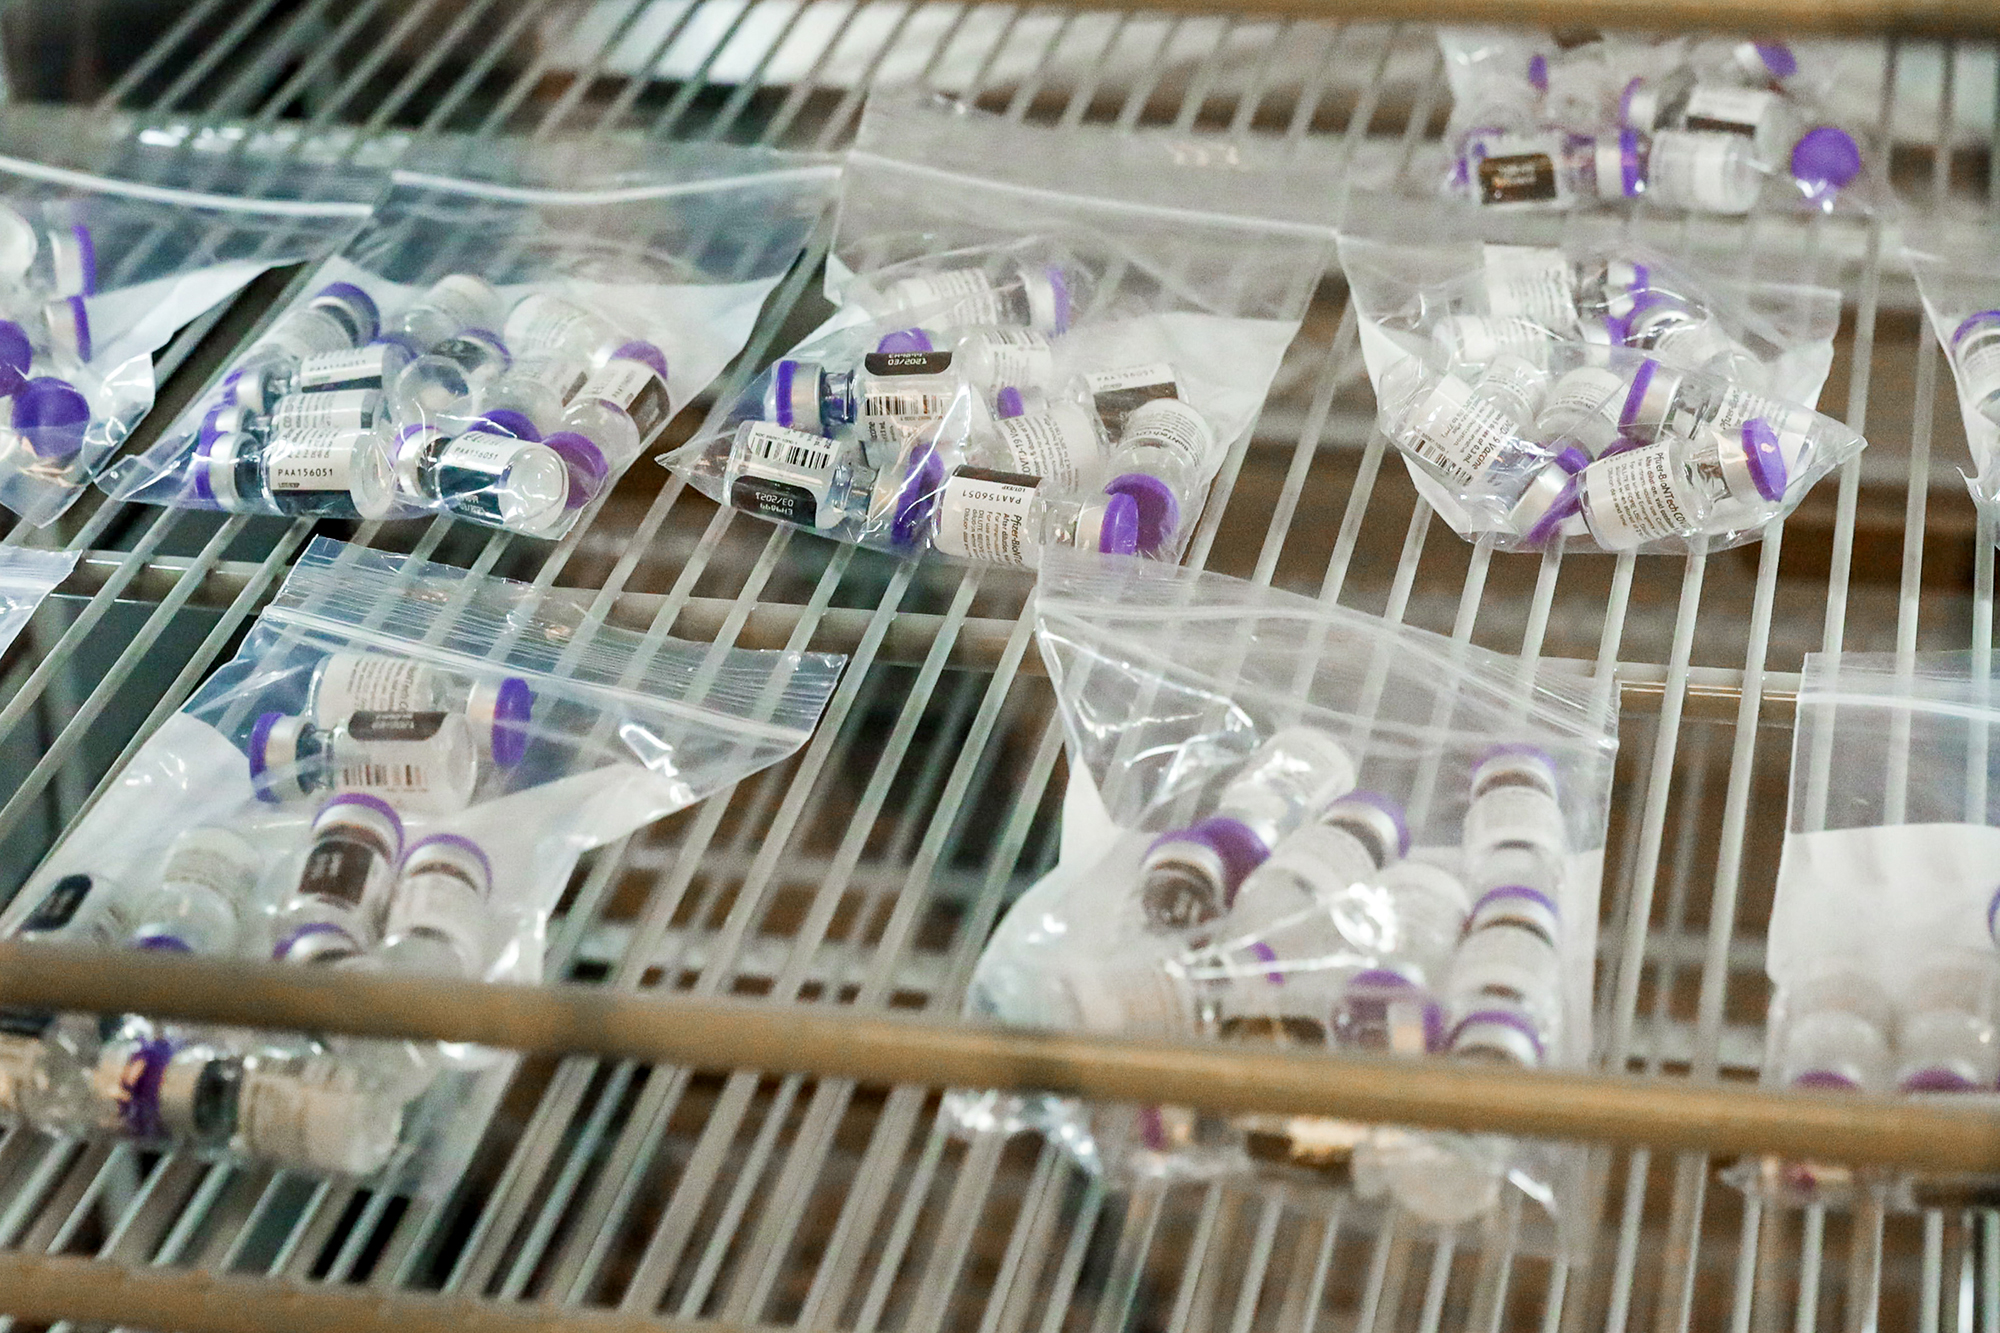 Vials of COVID vaccine in plastic baggies inside a refrigerator.